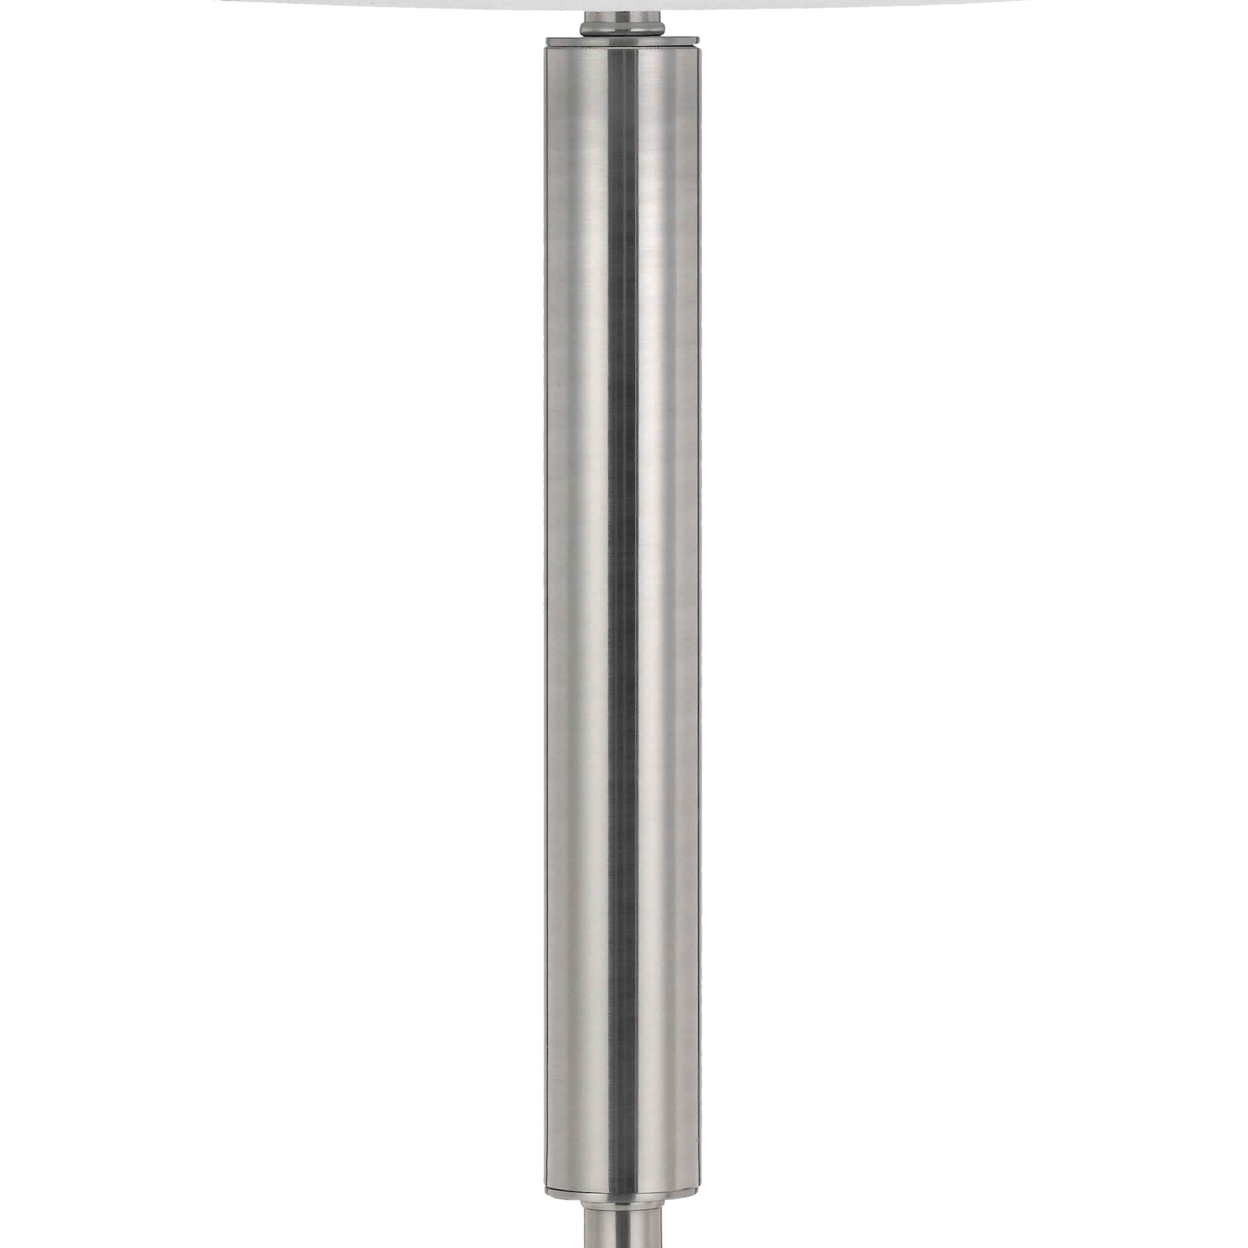 100 Watt Metal Frame Night Stand Lamp With Fabric Shade, White And Silver- Saltoro Sherpi